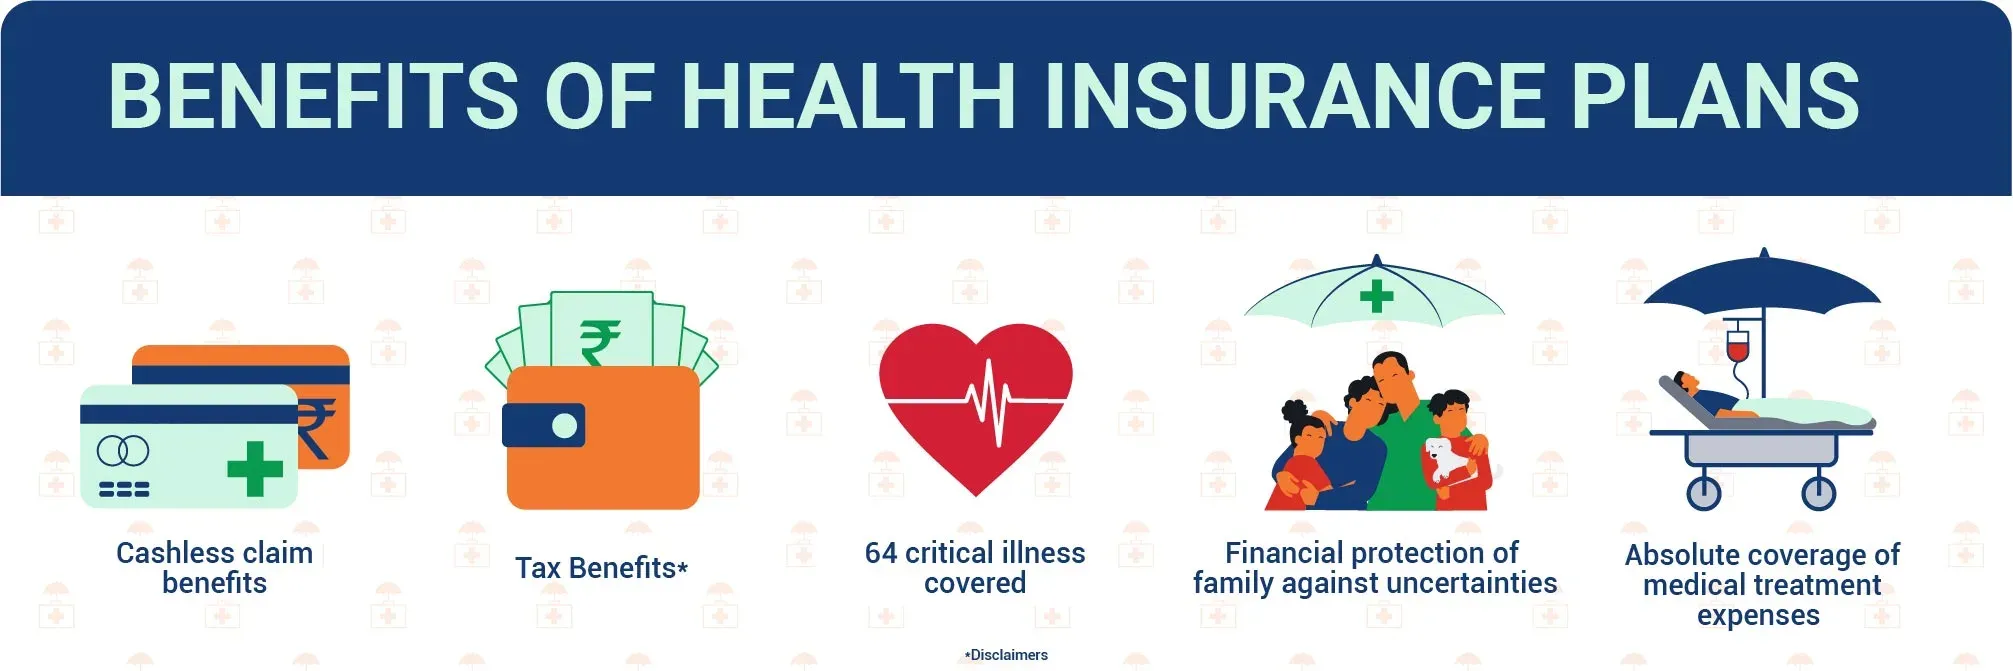 benefits-of-health-insurance-plans.webp